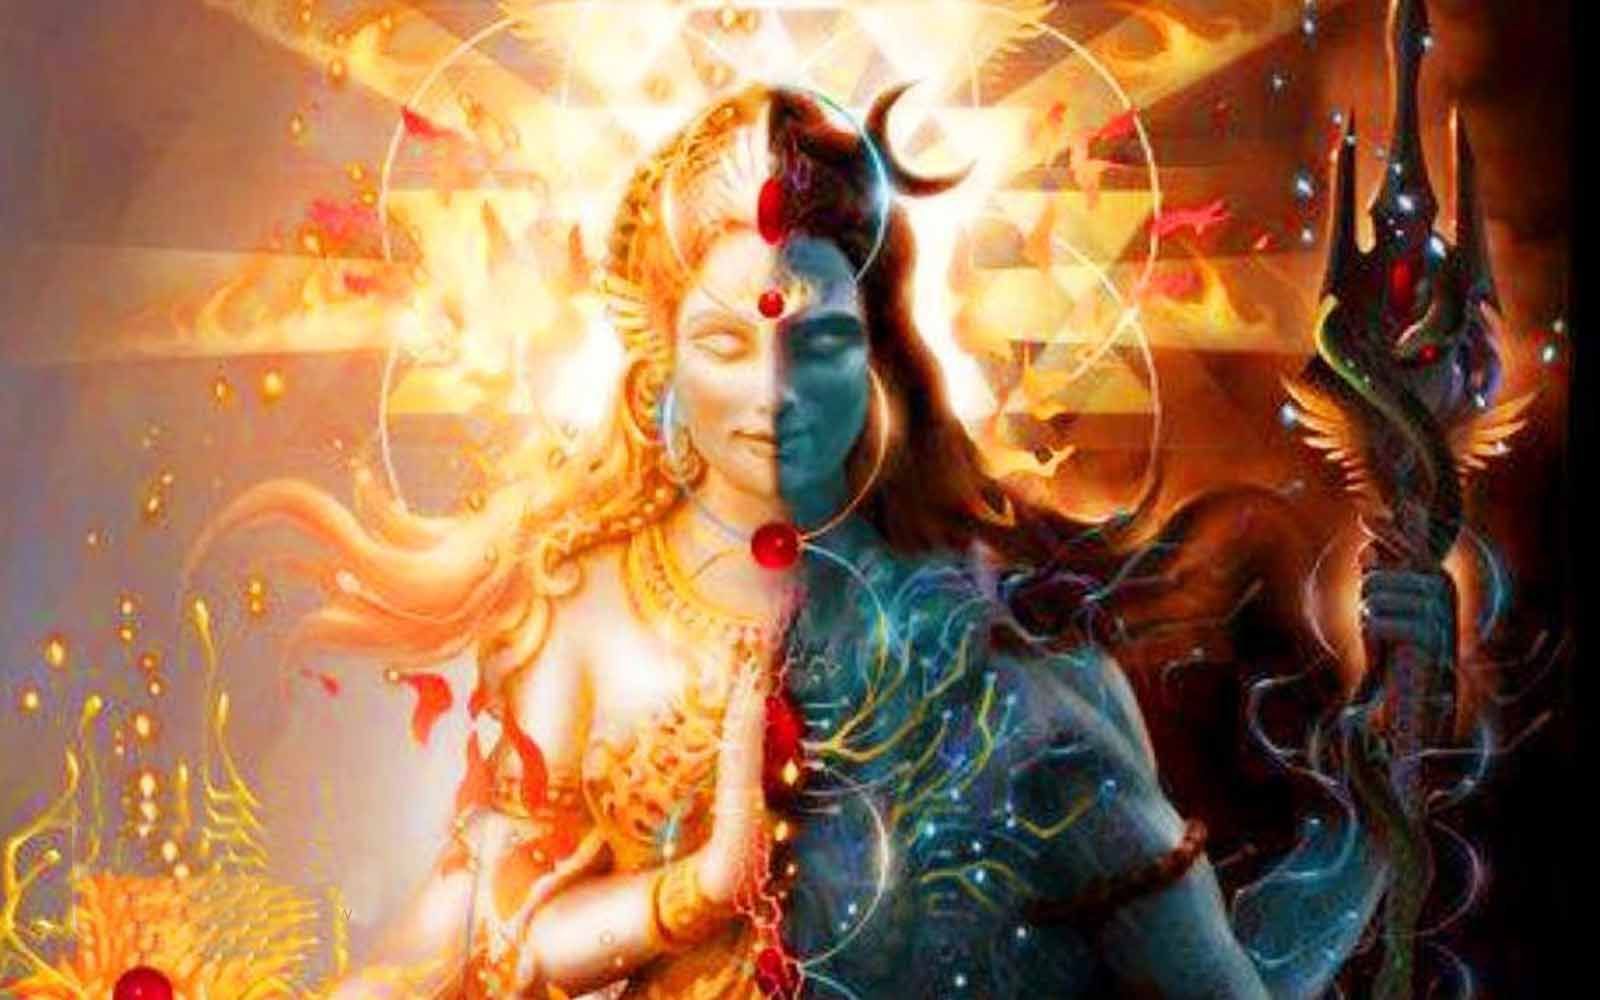 god shiva HD wallpaper free download. Lord shiva, Shiva shakti